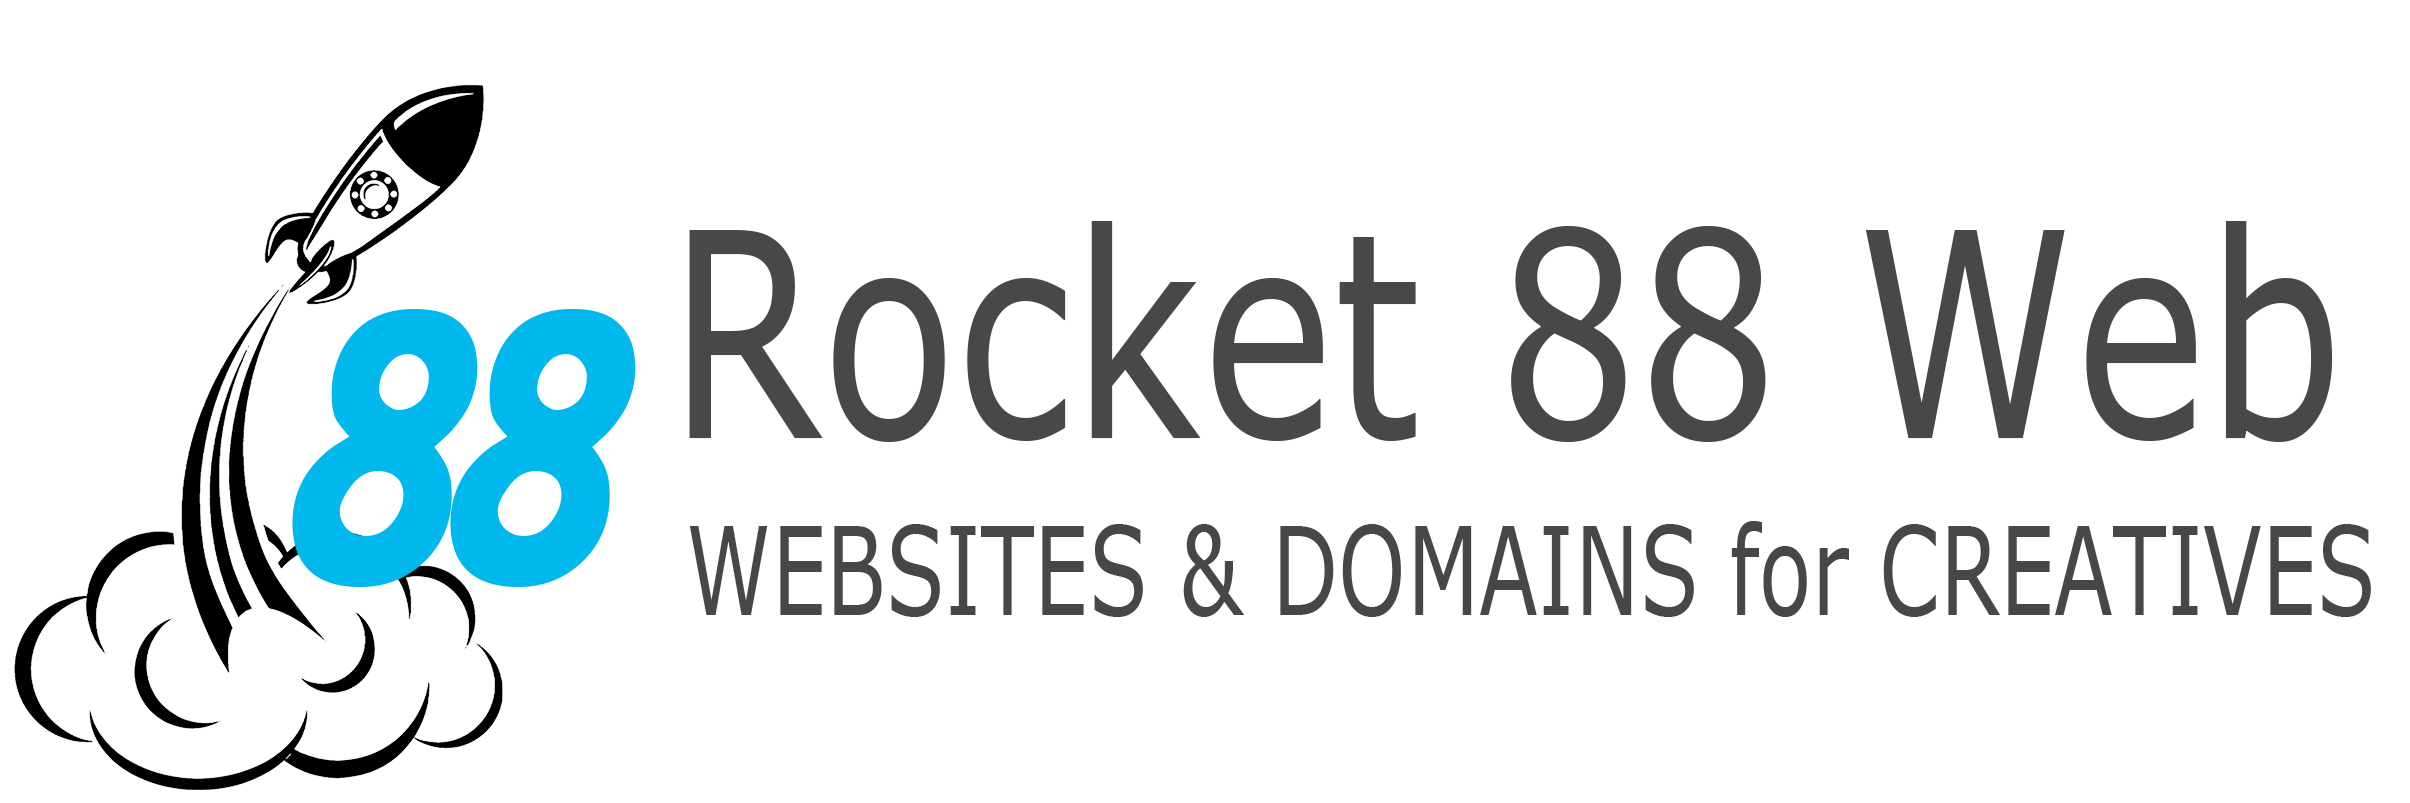 Rocket 88 Websites